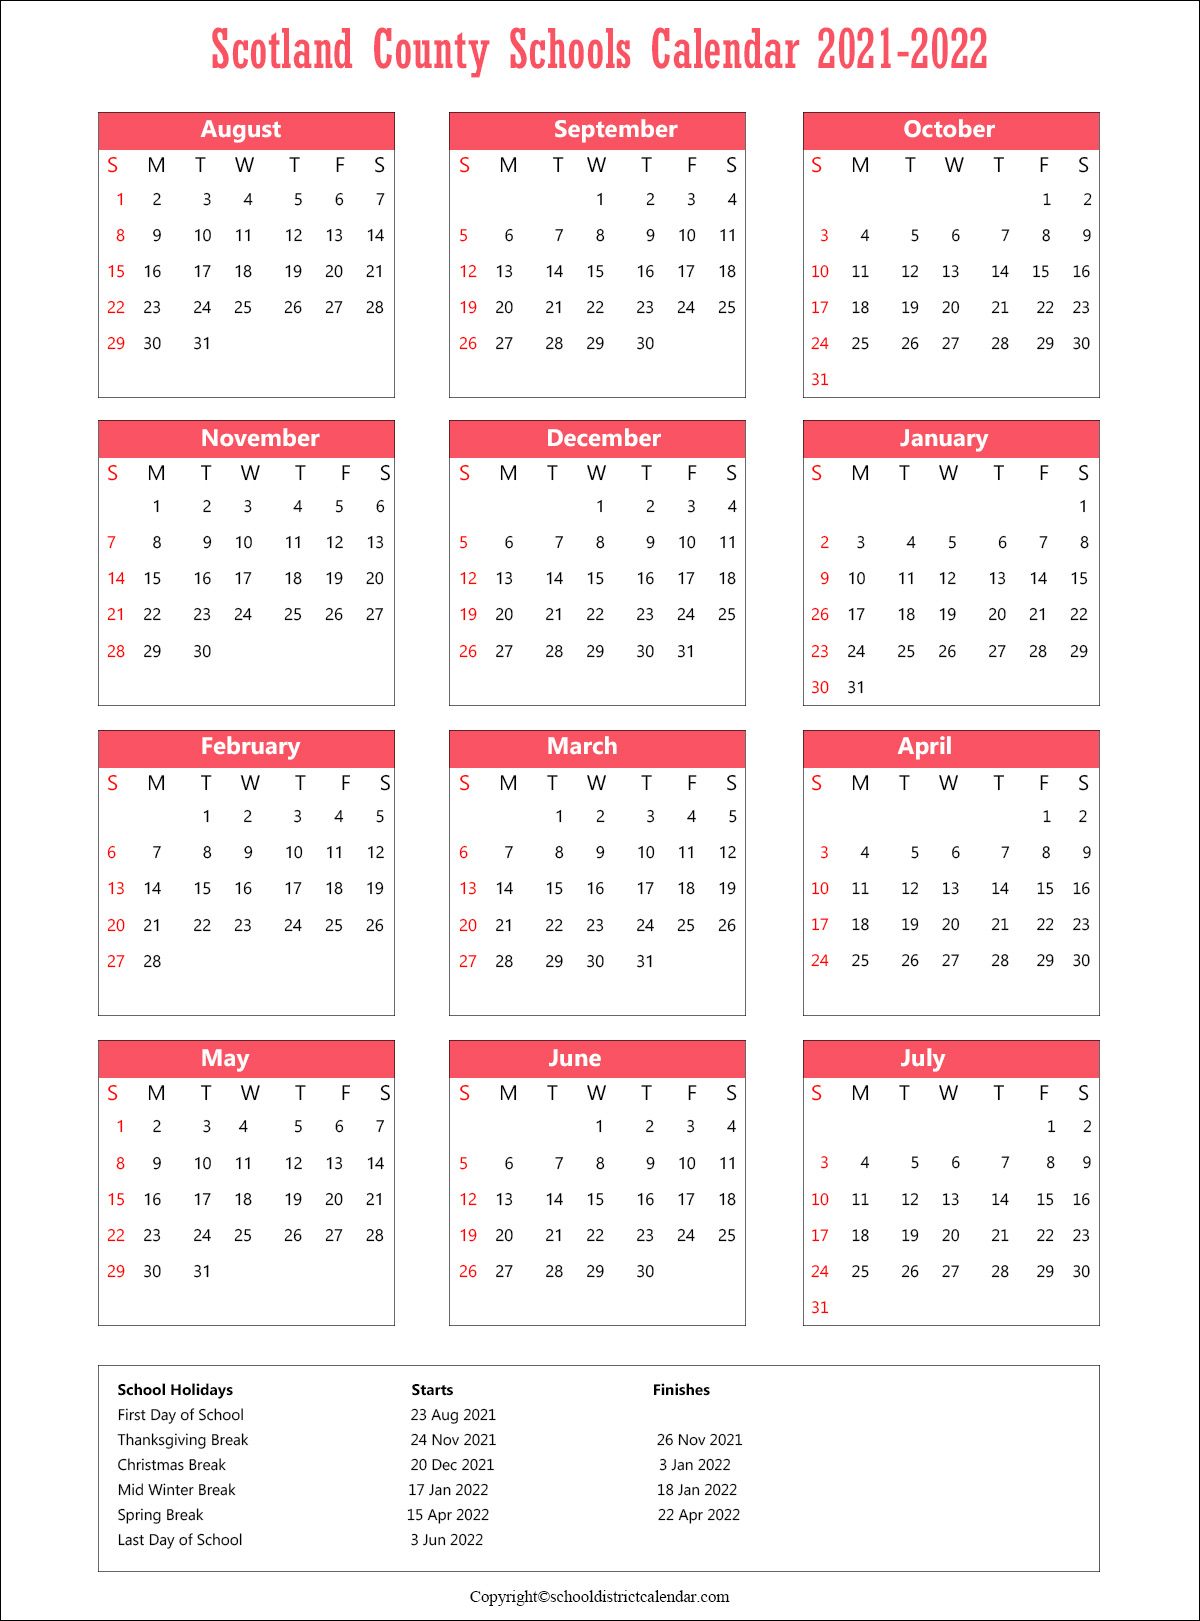 Scotland County Schools Calendar, Laurinburg Holidays 2021